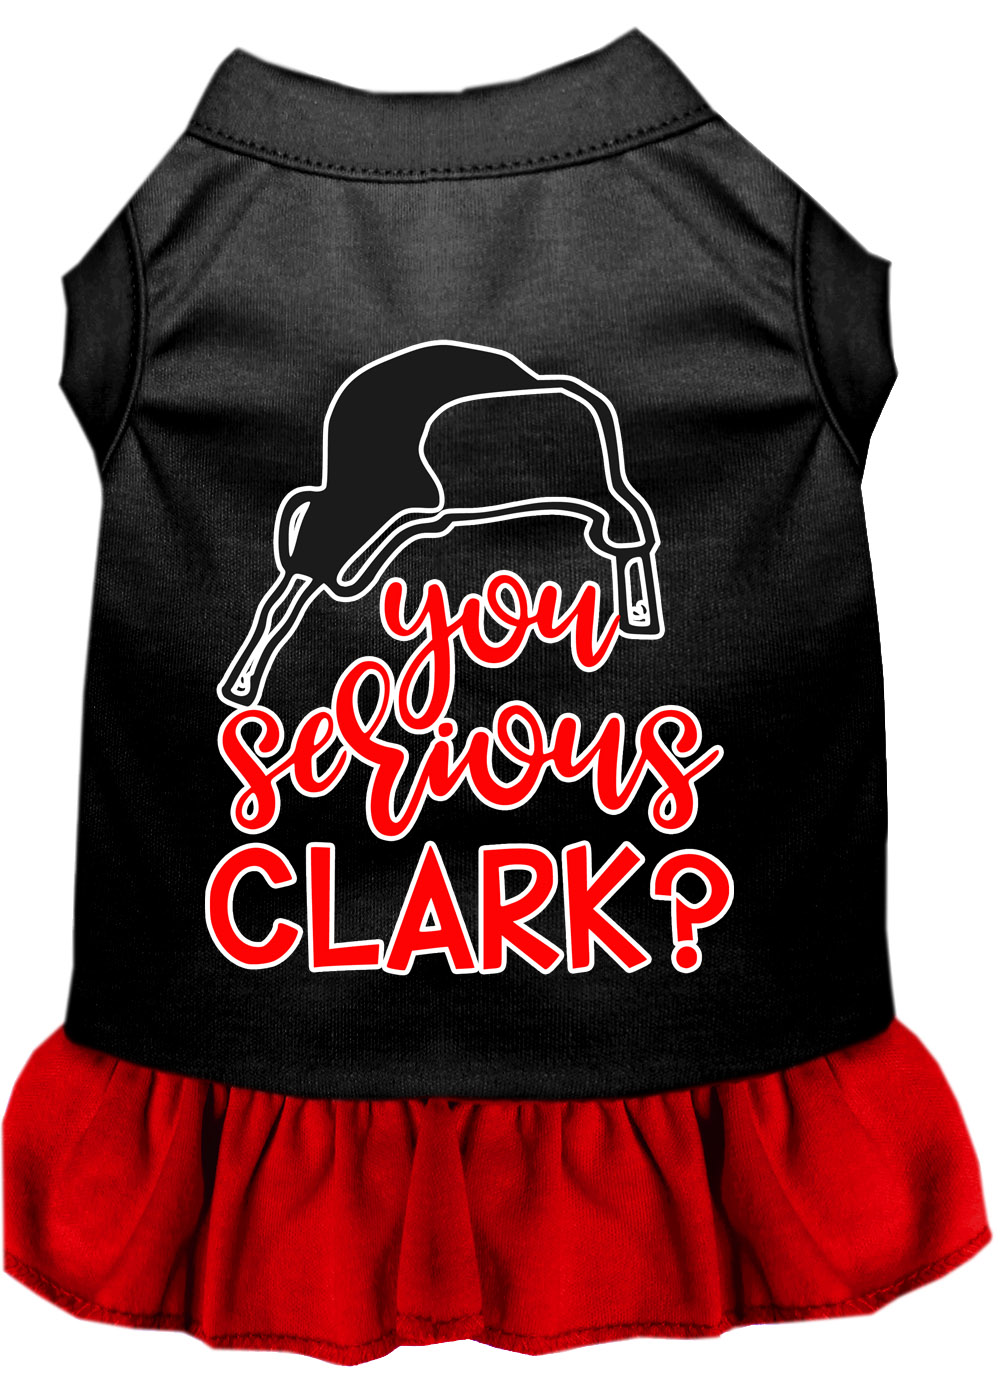 You Serious Clark? Screen Print Dog Dress Black with Red XXXL